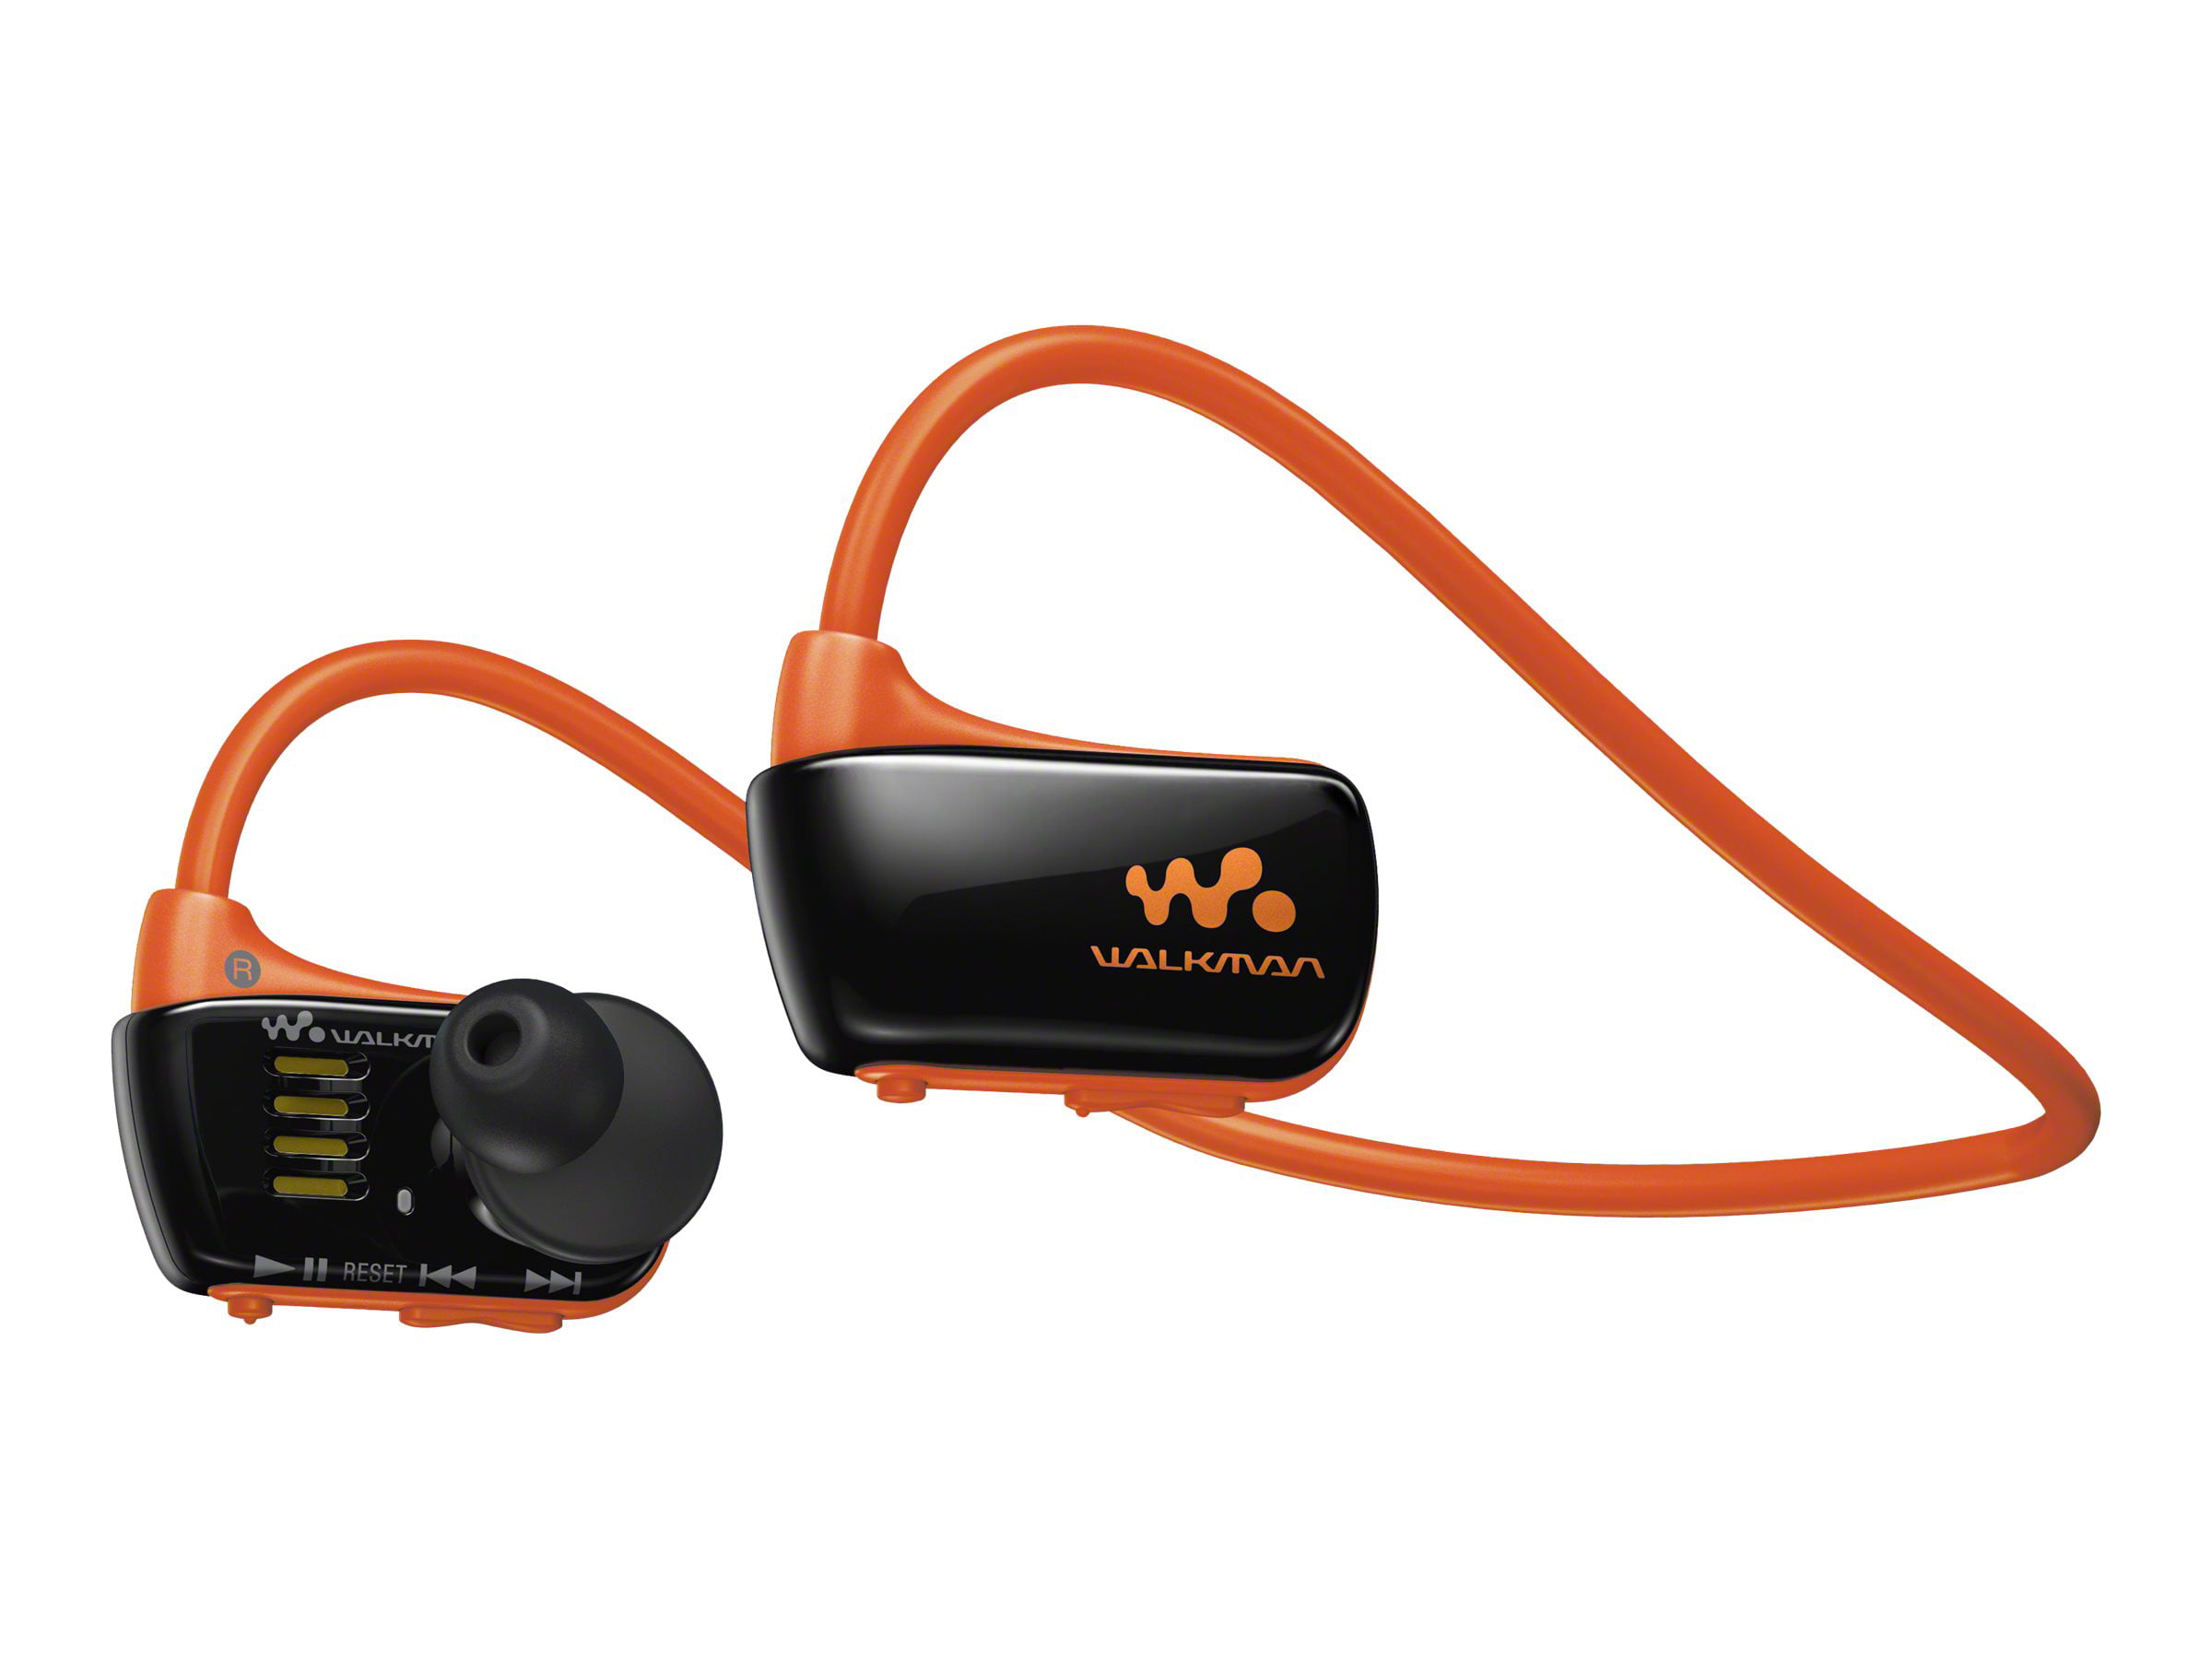 Tectonic klinke krigsskib Sony Walkman NWZ-W273S - Headband headphones with Walkman USB cradle - 4 GB  - orange - Walmart.com